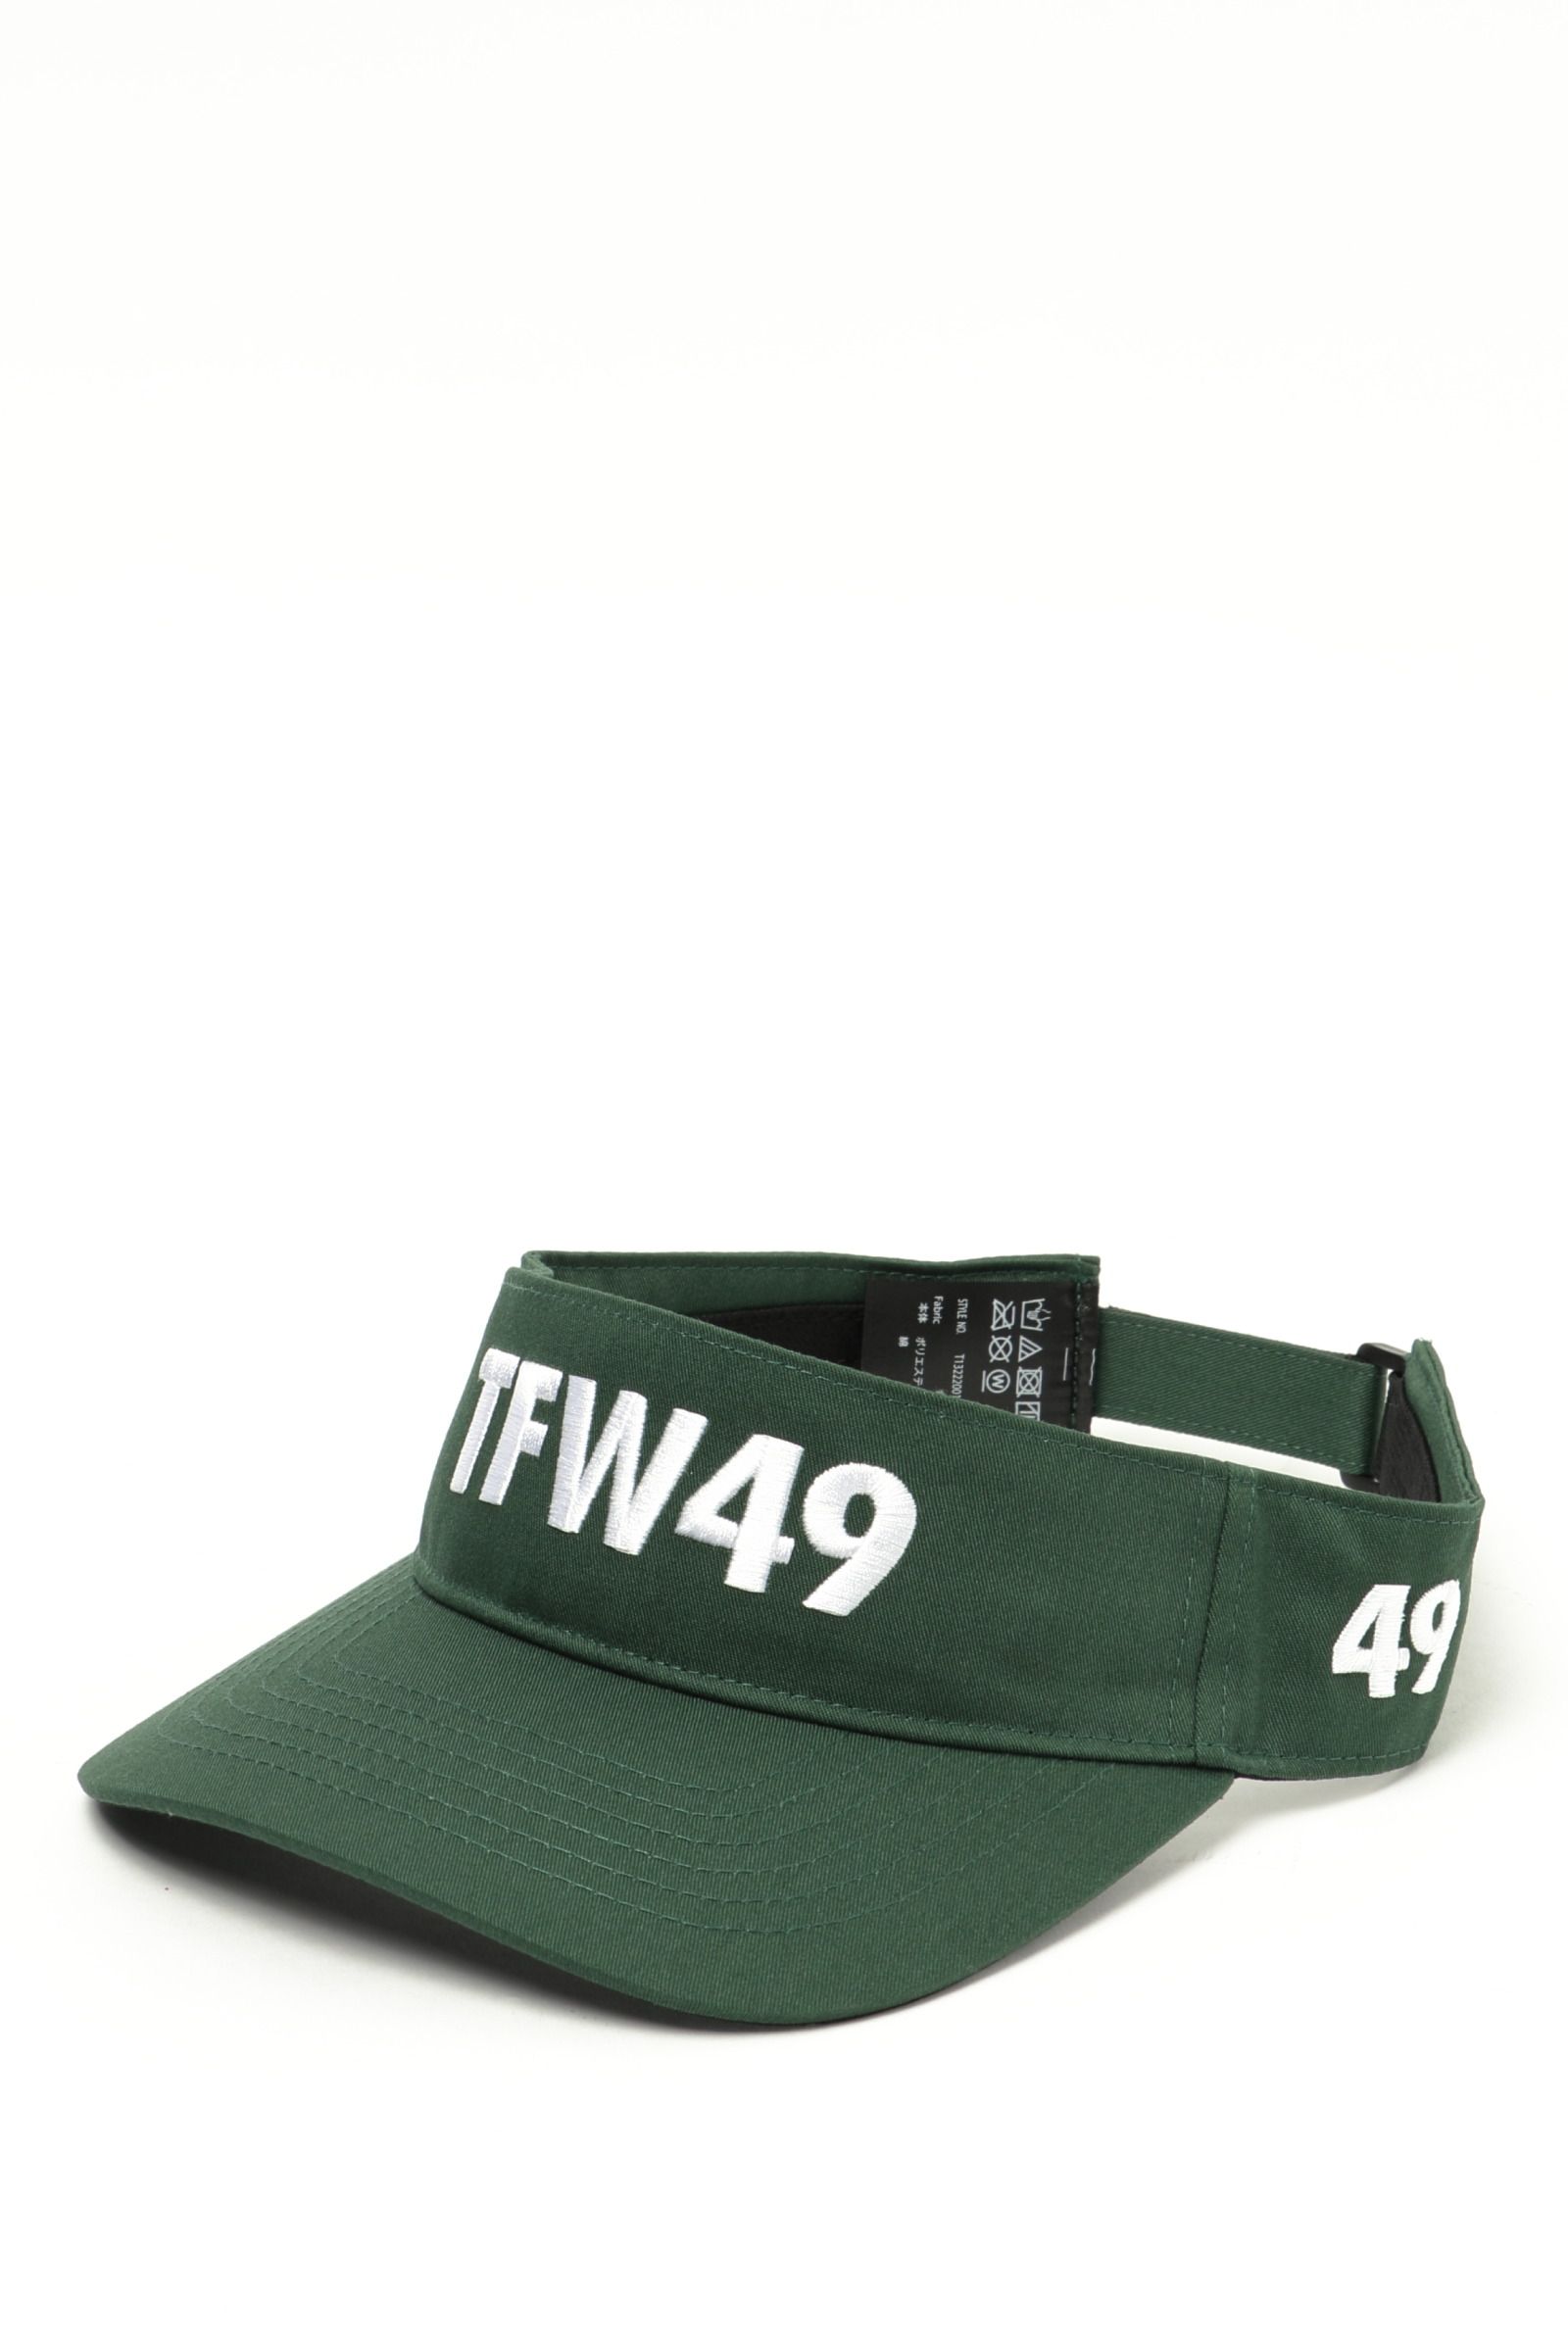 TFW49 - TFW SUN VISOR サンバイザーブランドロゴ サンバイザー